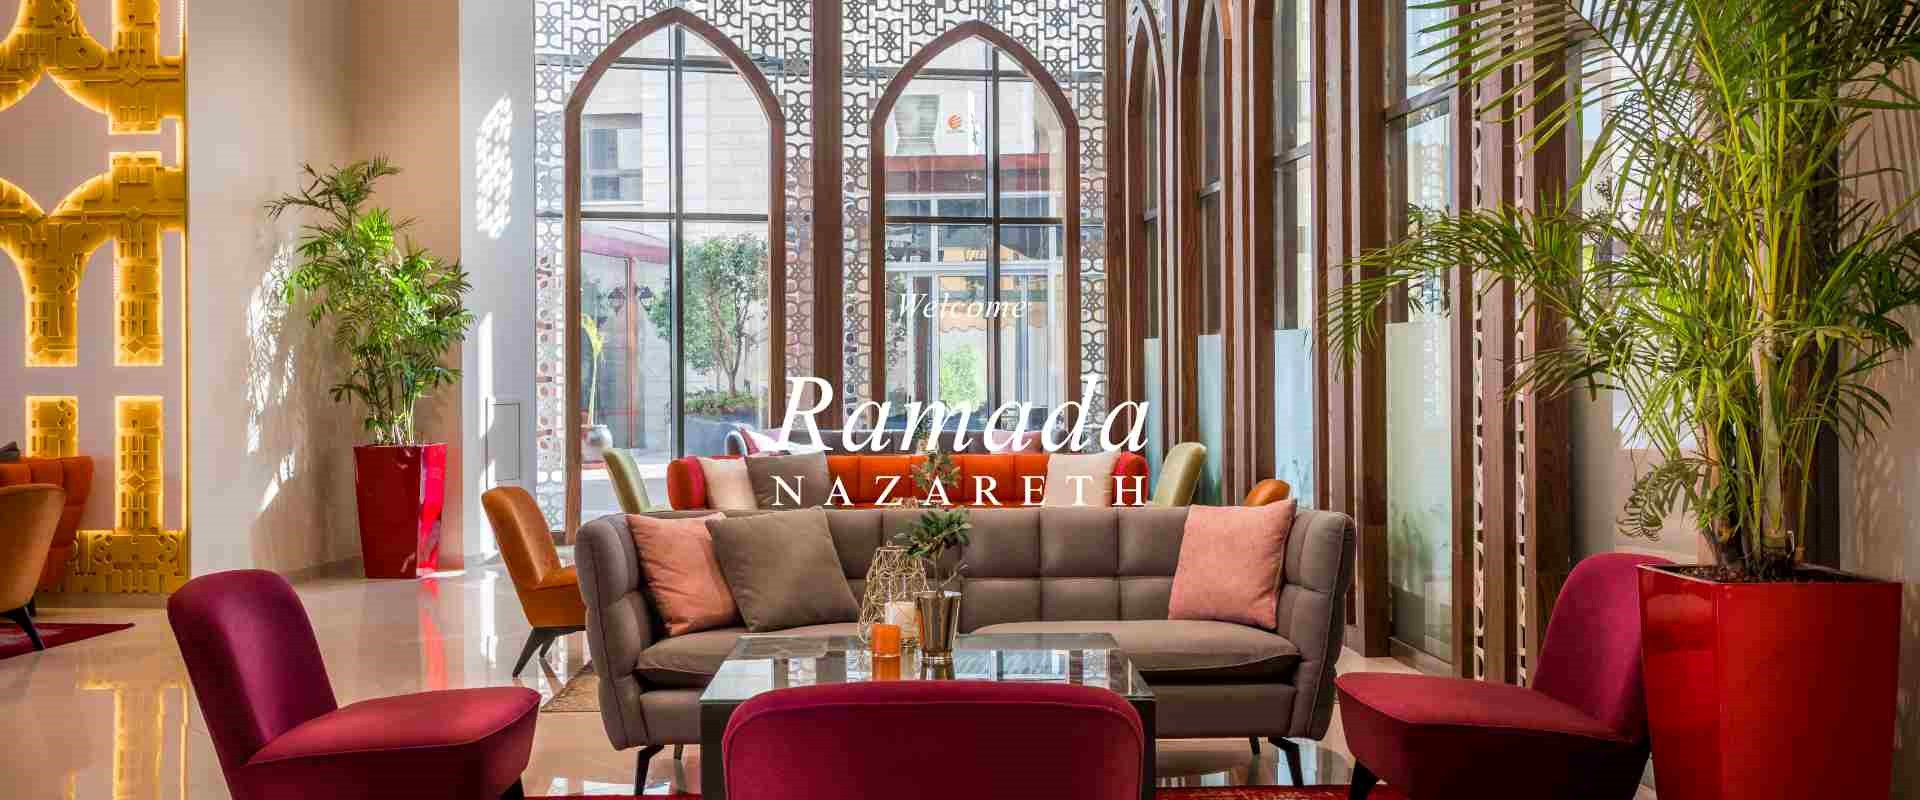 Ramada Olivie Nazereth Hotel